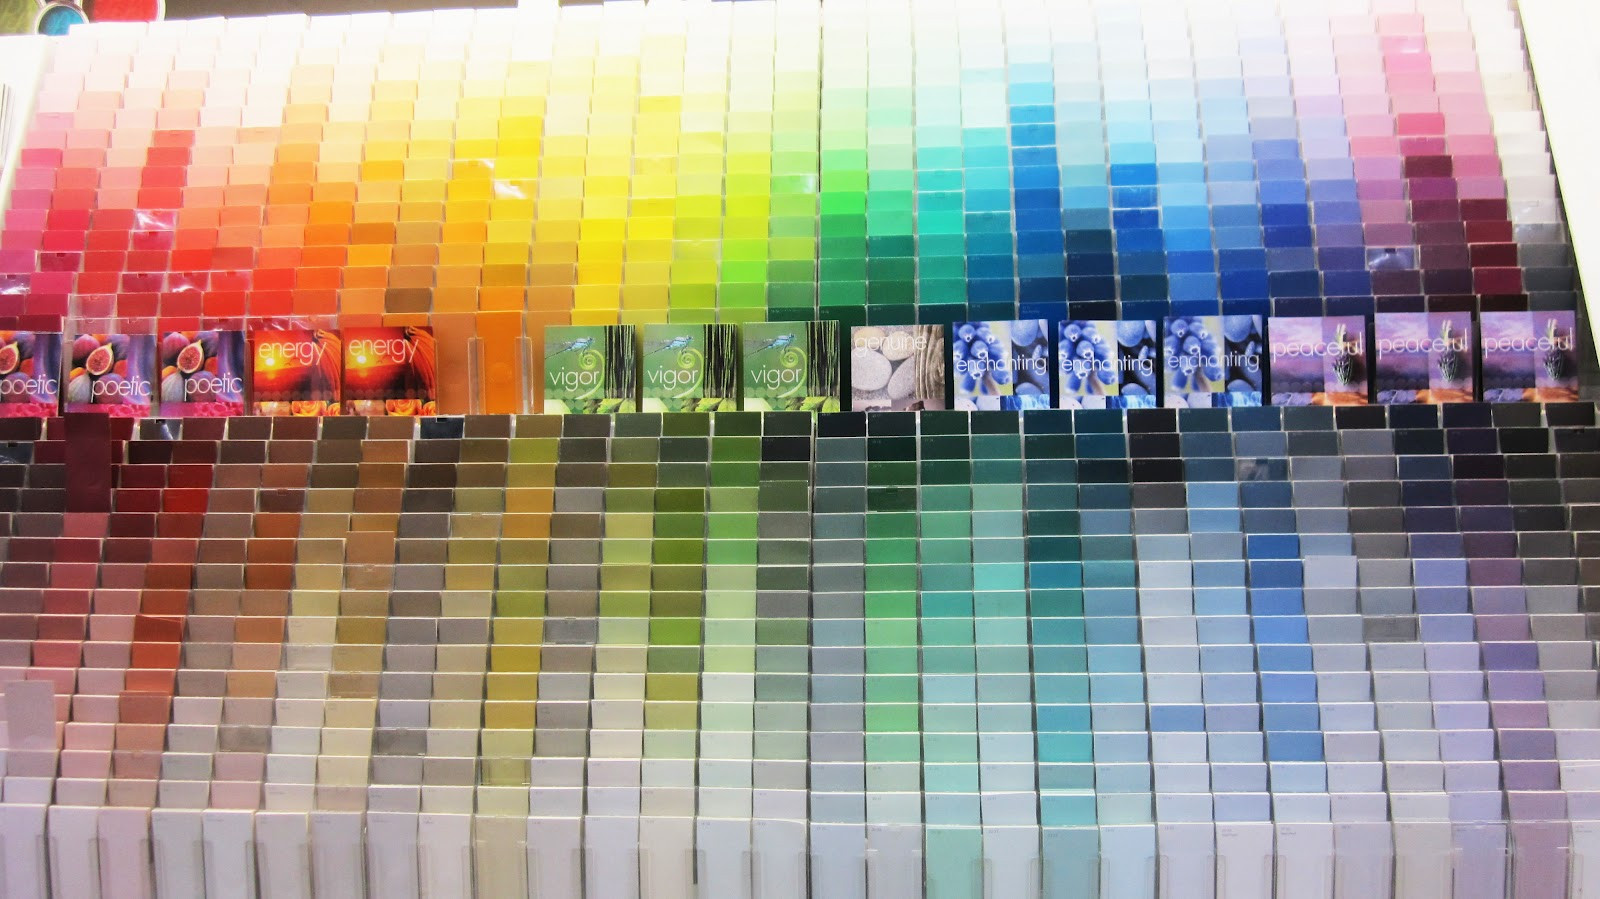 Best ideas about Paint Colors Home Depot
. Save or Pin Home Depot Disney Paint Colors Now.